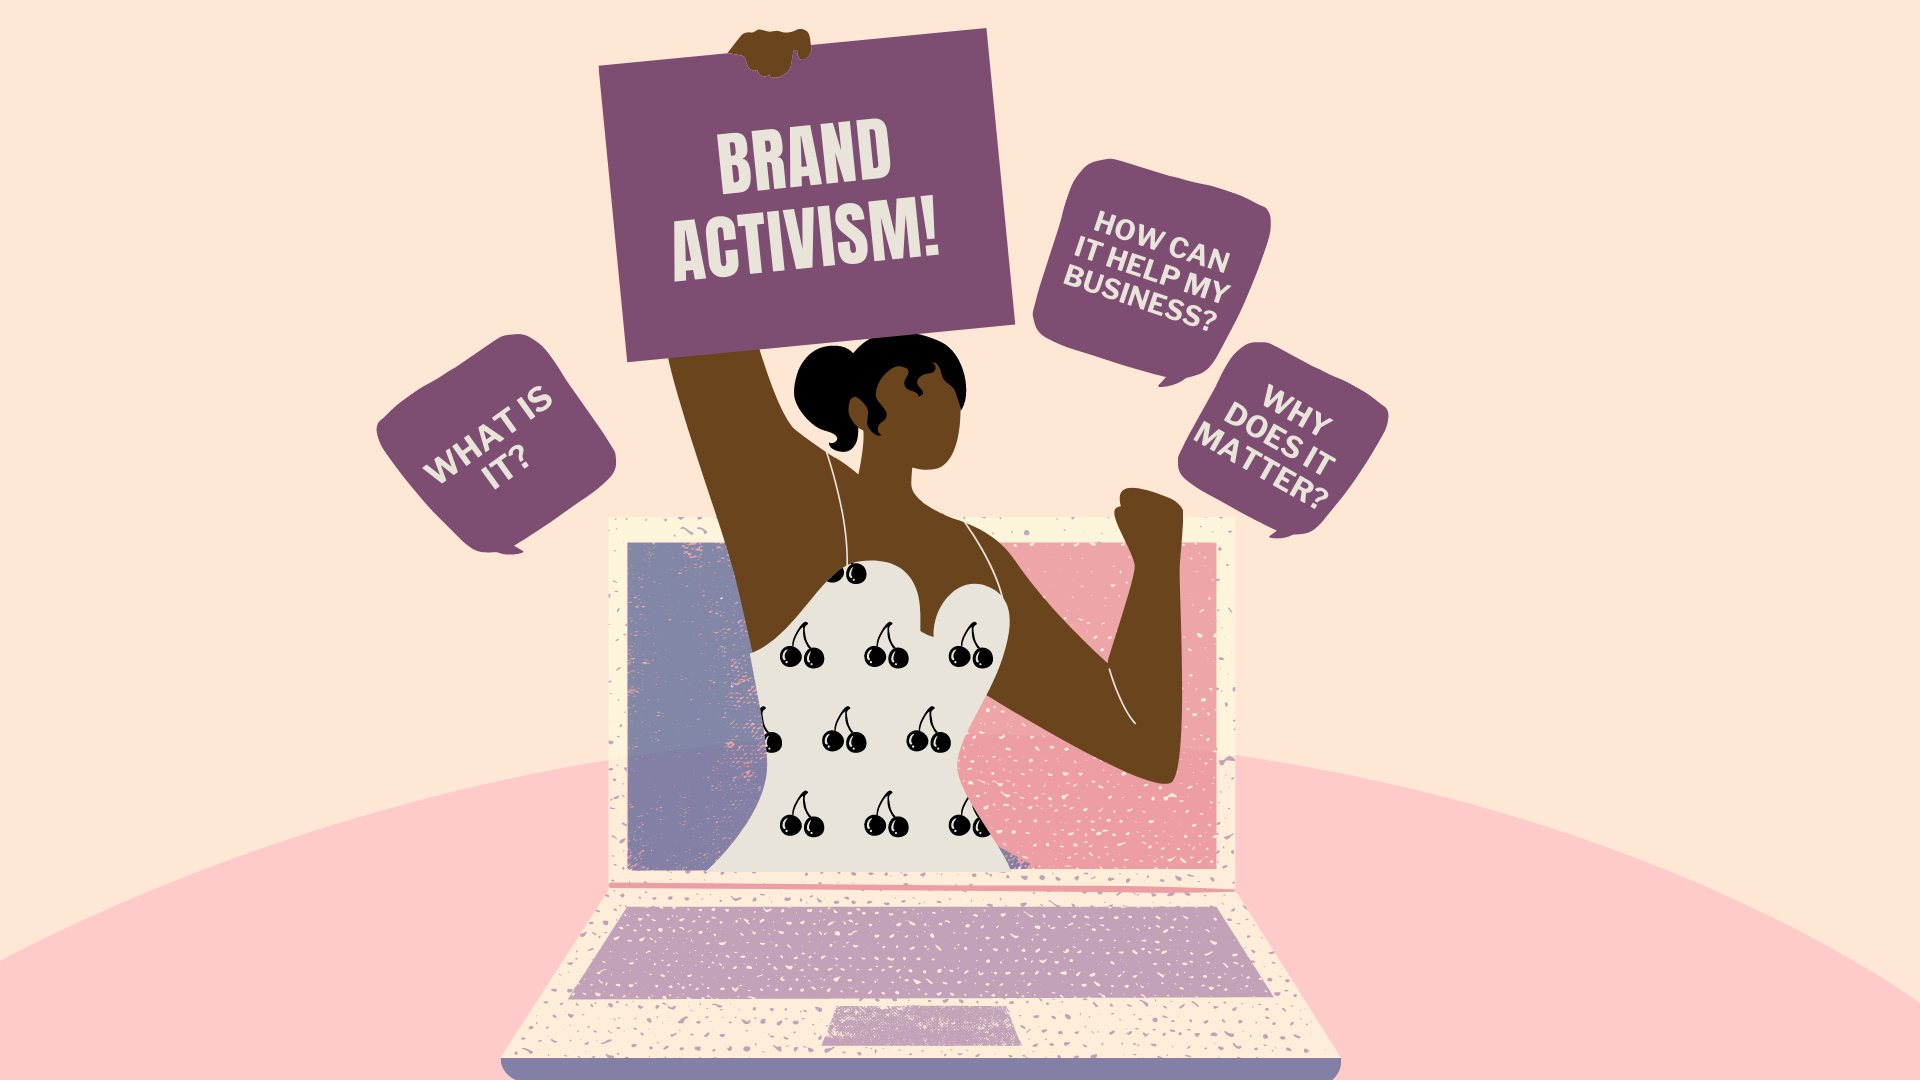 Brand activism